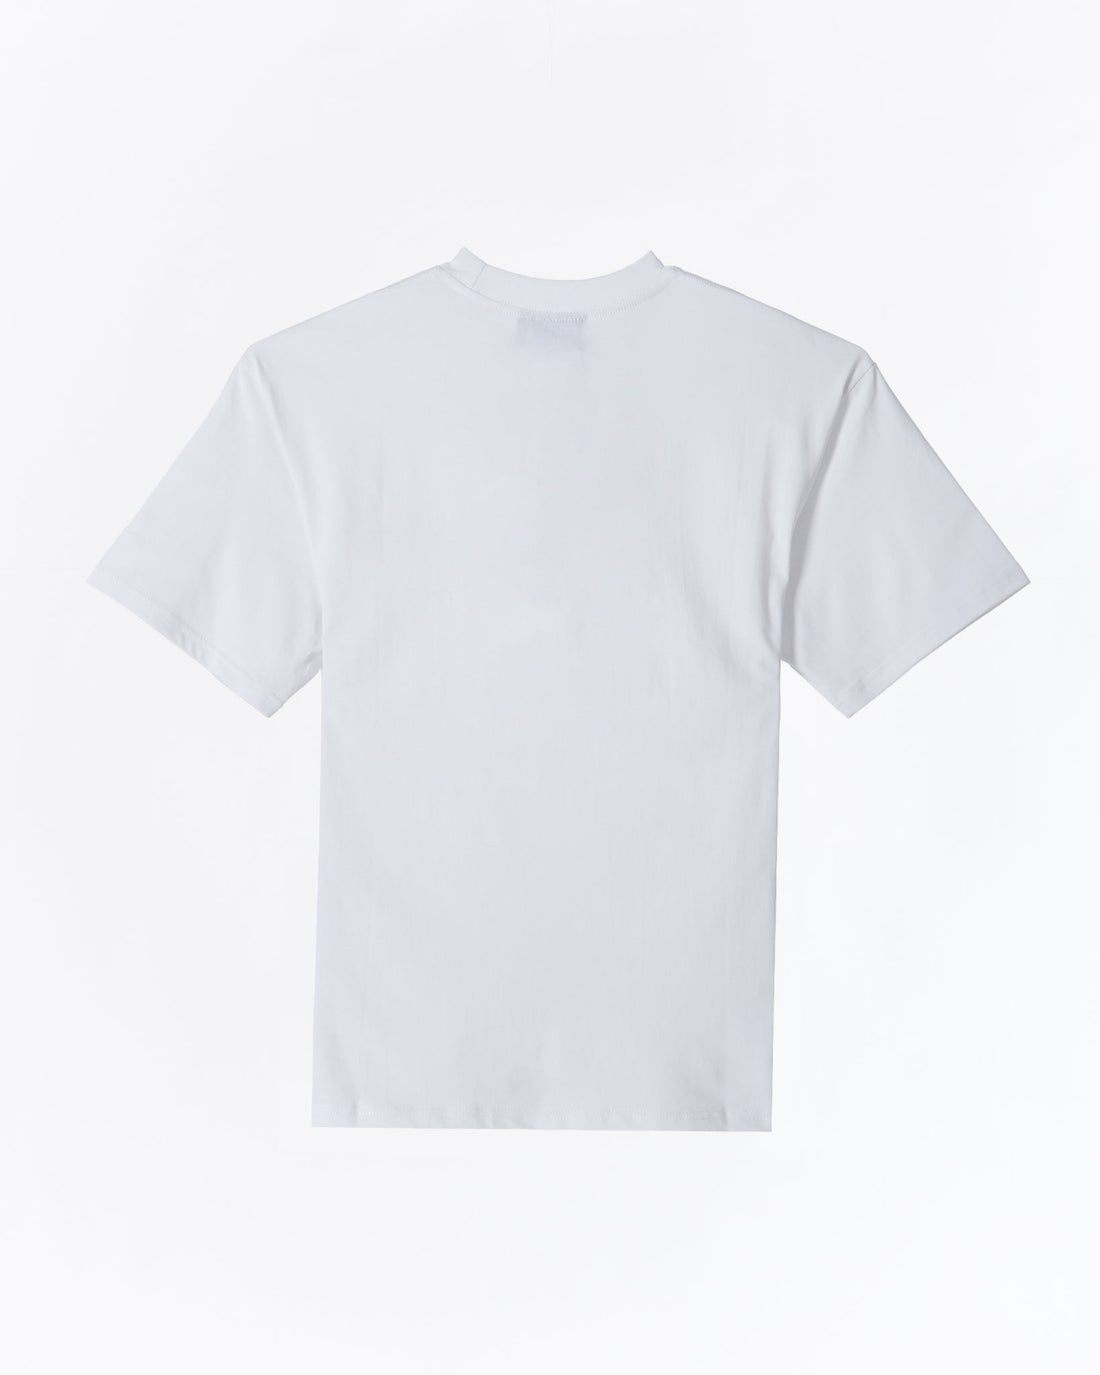 MOI OUTFIT-DRE Teddy Bear Unisex White T-Shirt 20.90